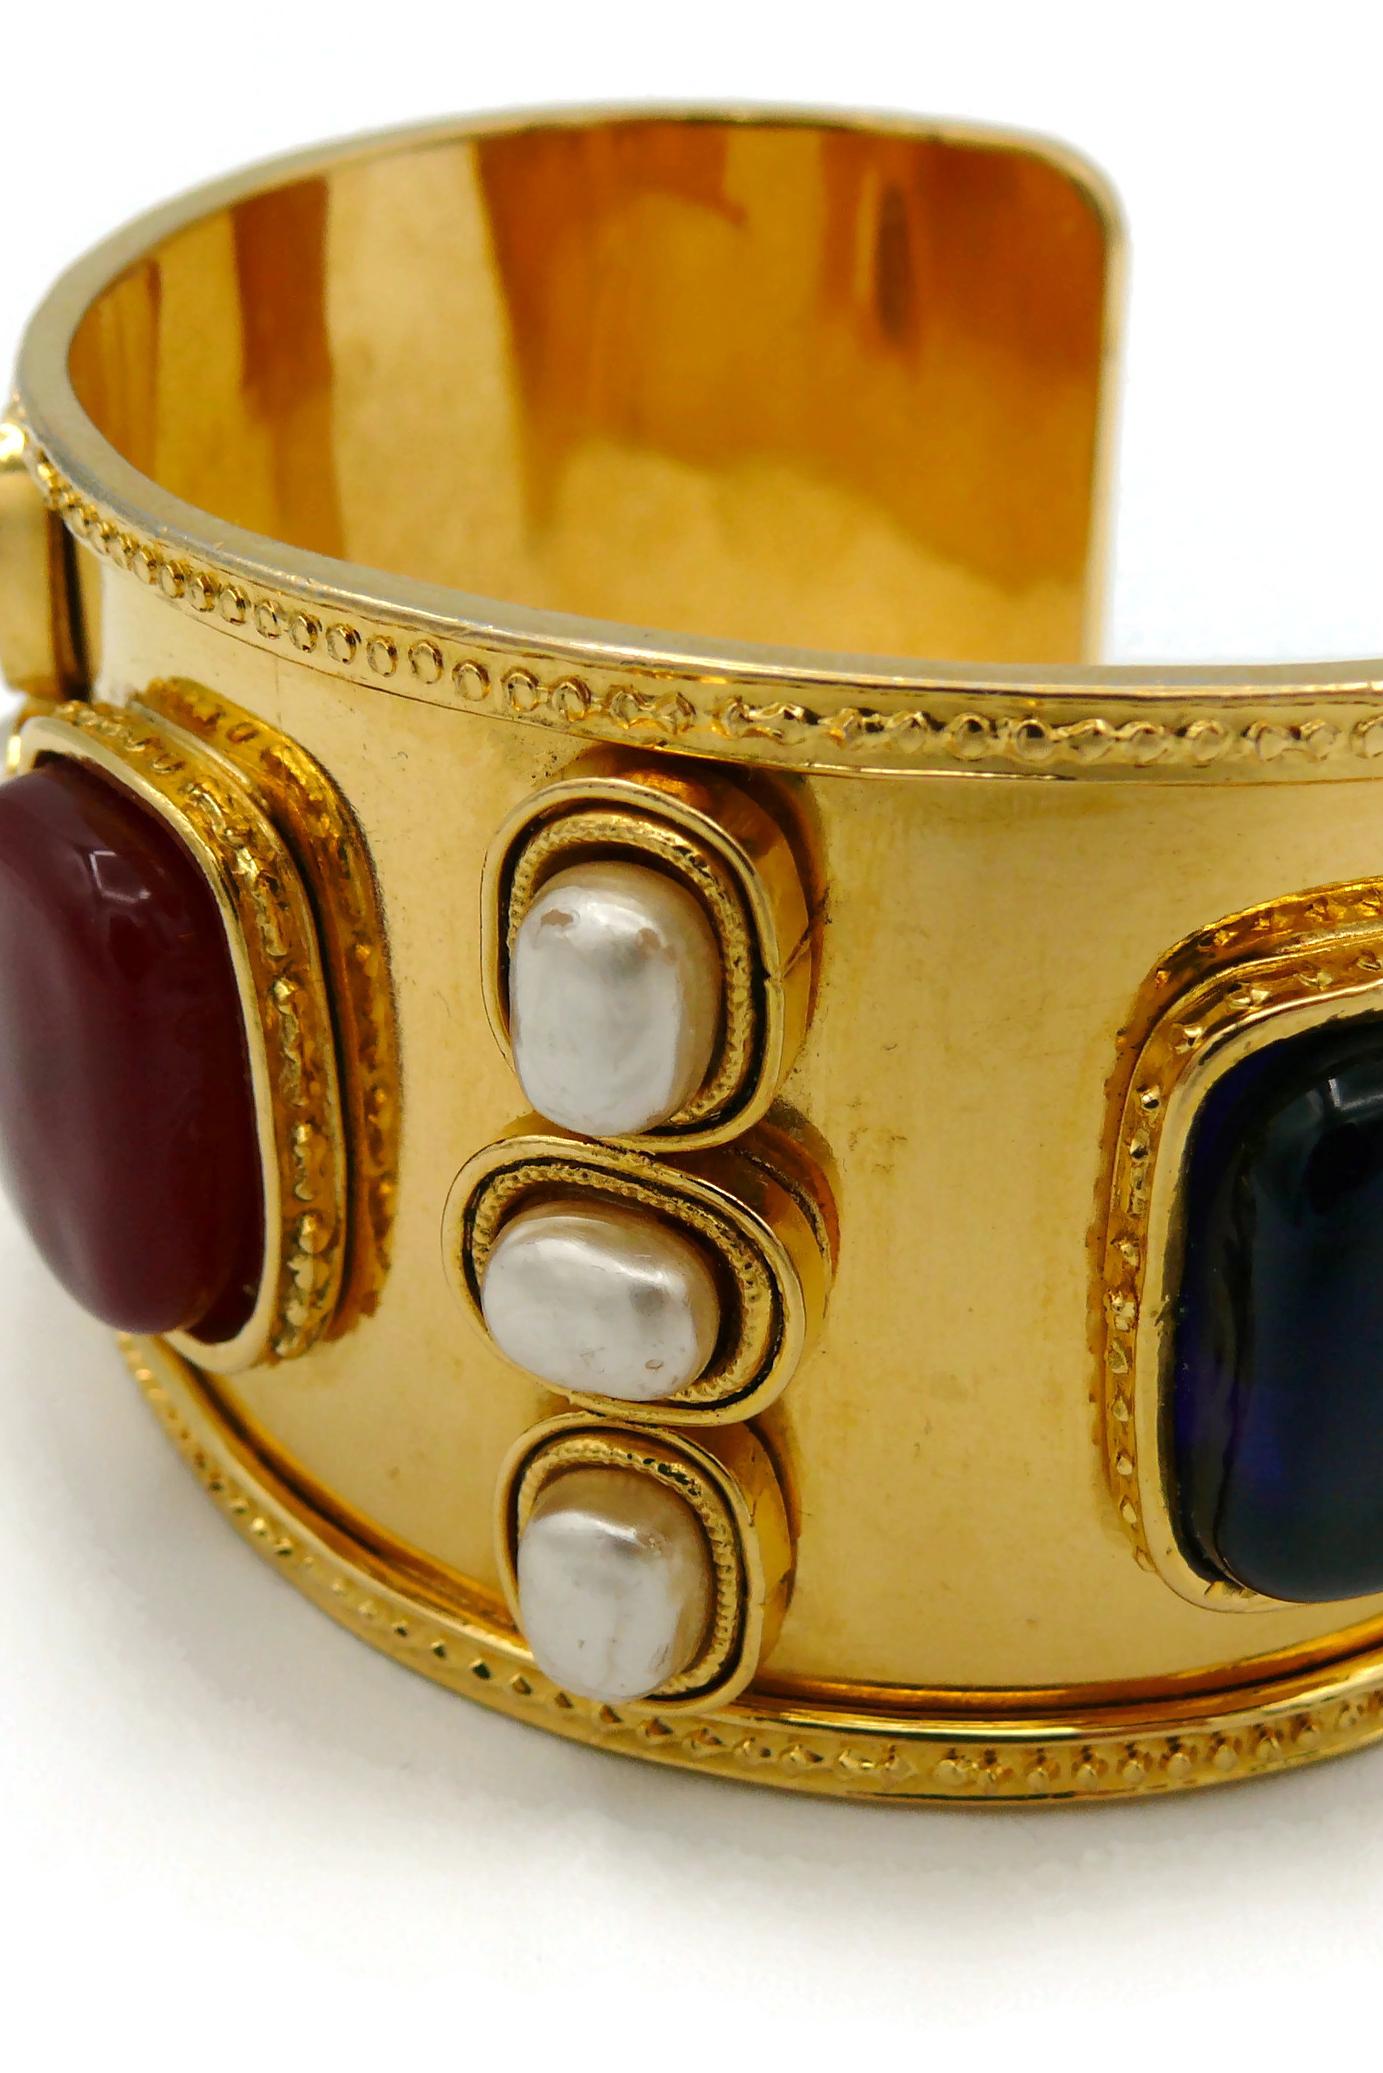 CHANEL Vintage Byzantine Inspired Gripoix Cuff Bracelet, 1990 For Sale 10